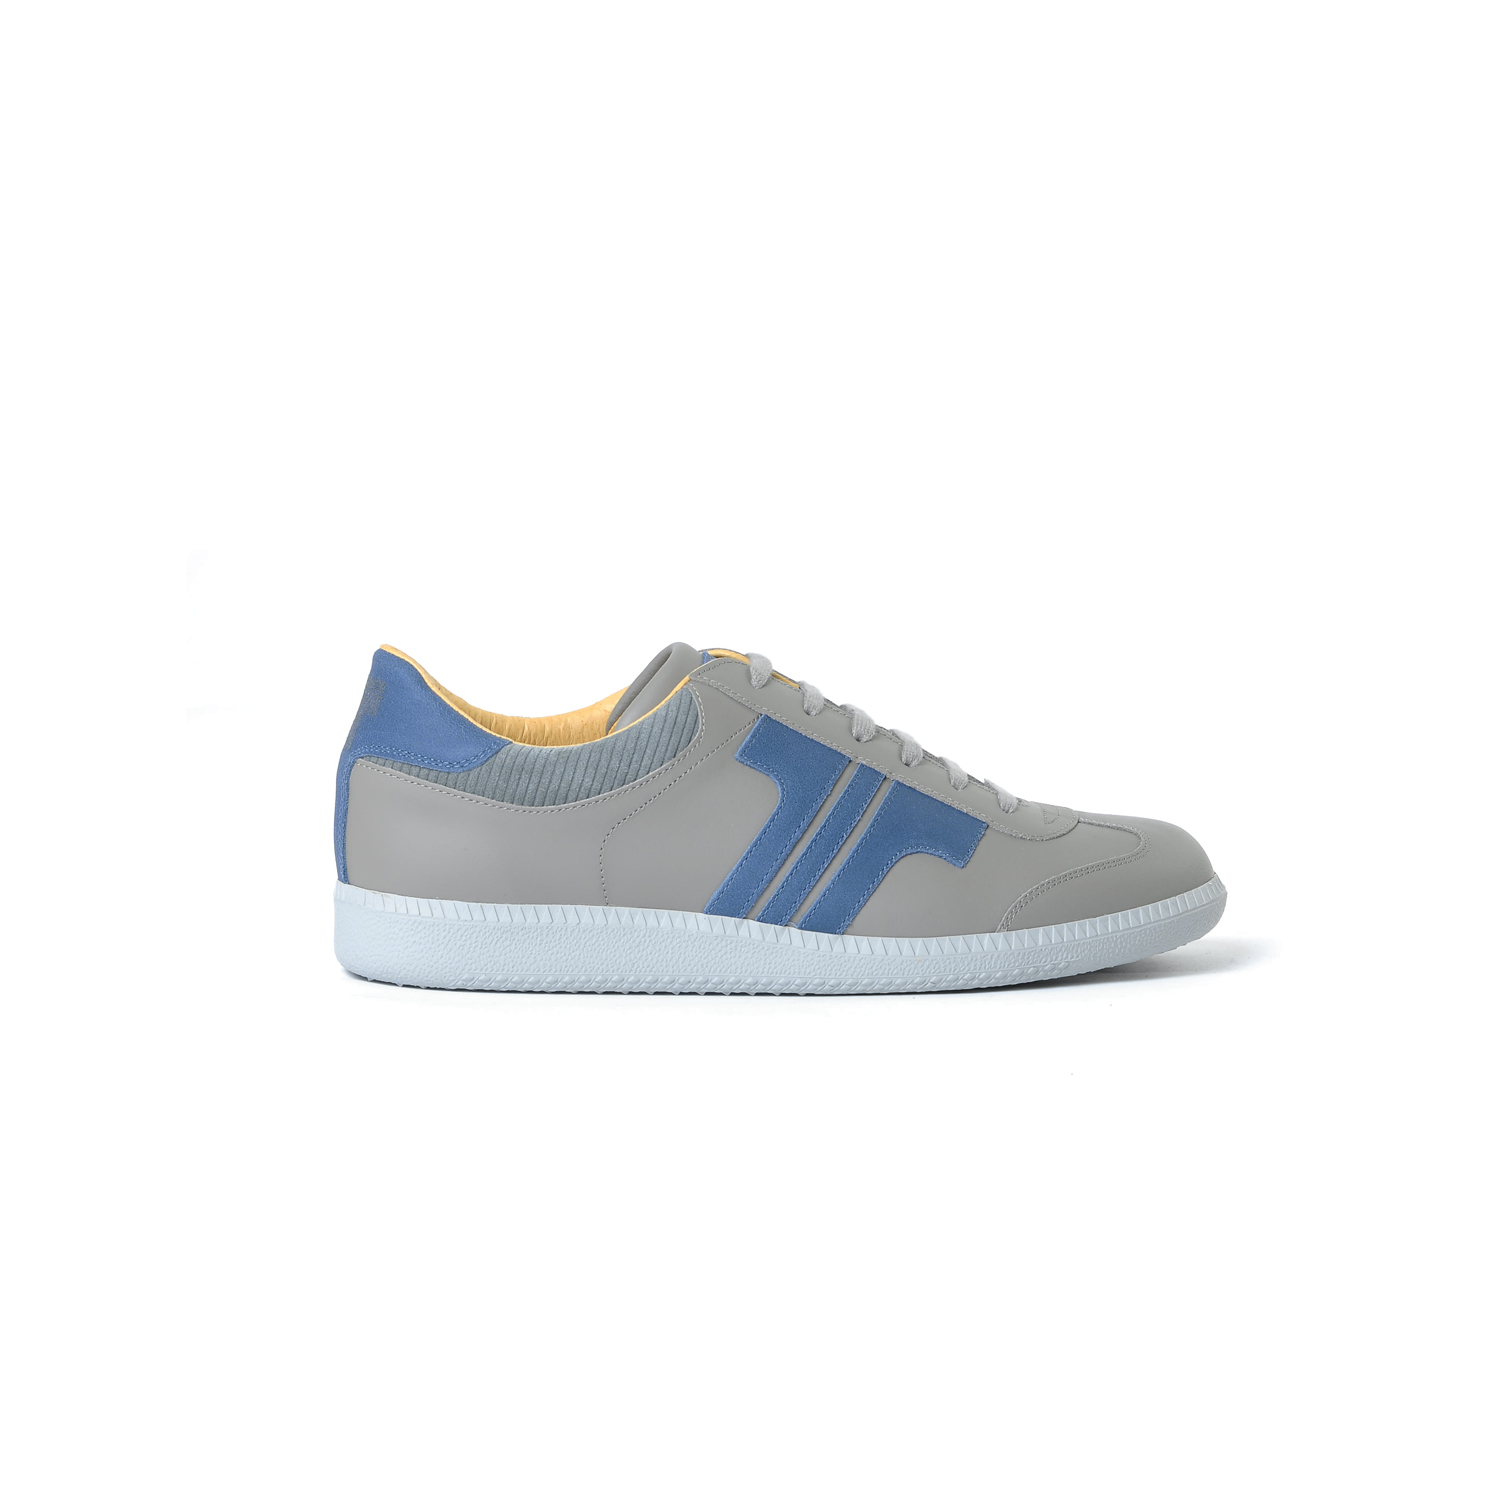 Tisza shoes - Compakt - Grey-blue-cord